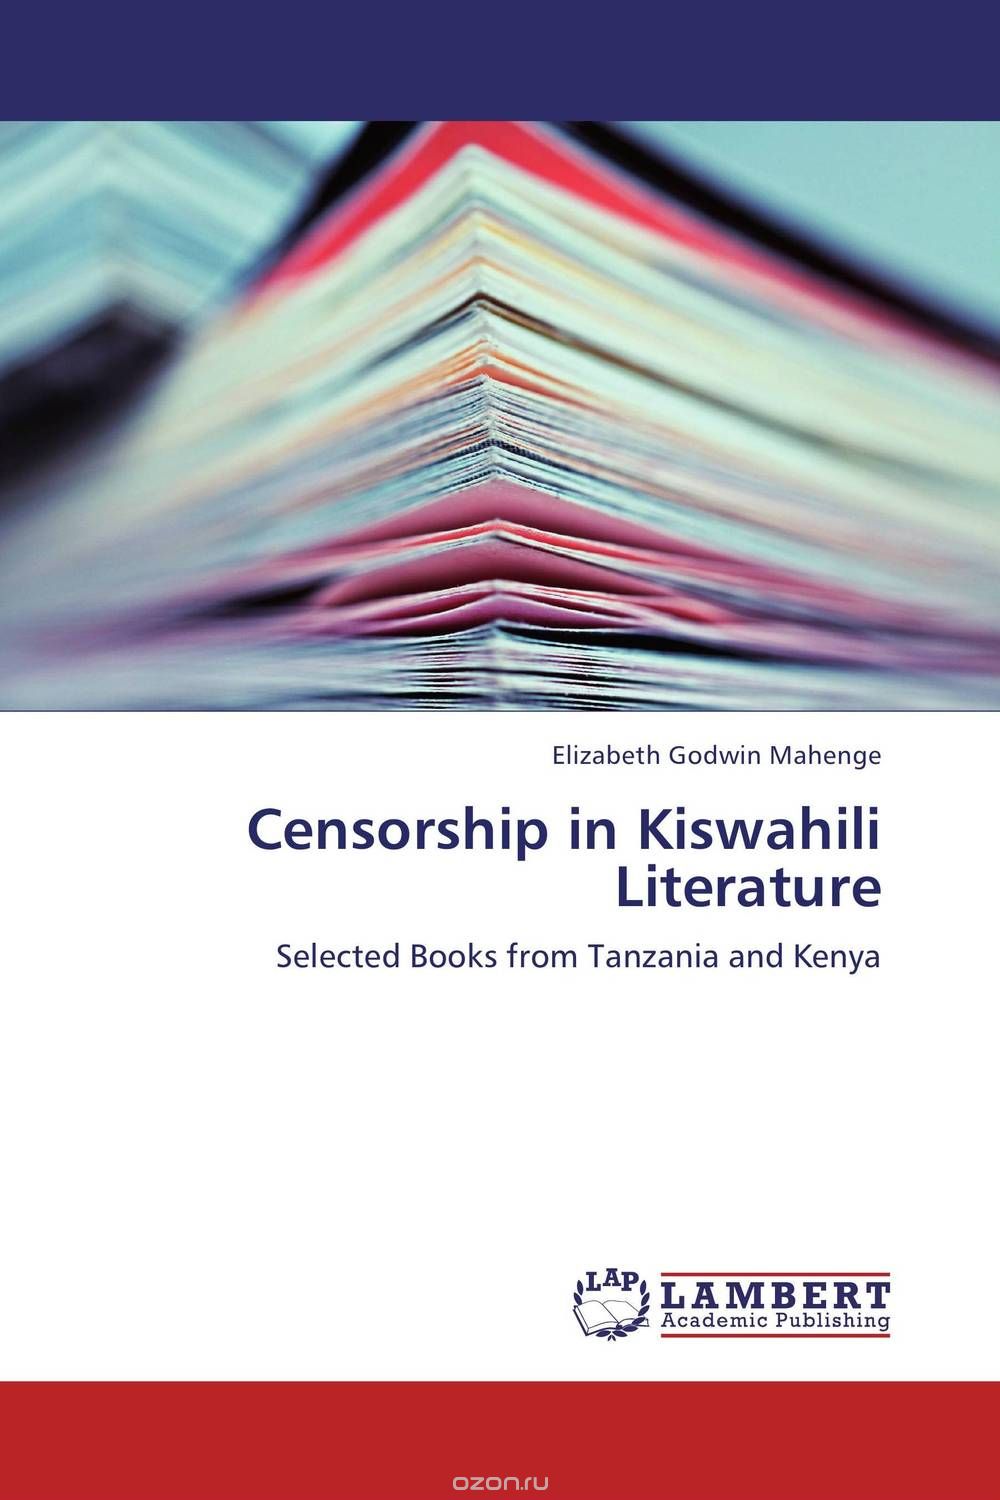 Скачать книгу "Censorship in Kiswahili Literature"